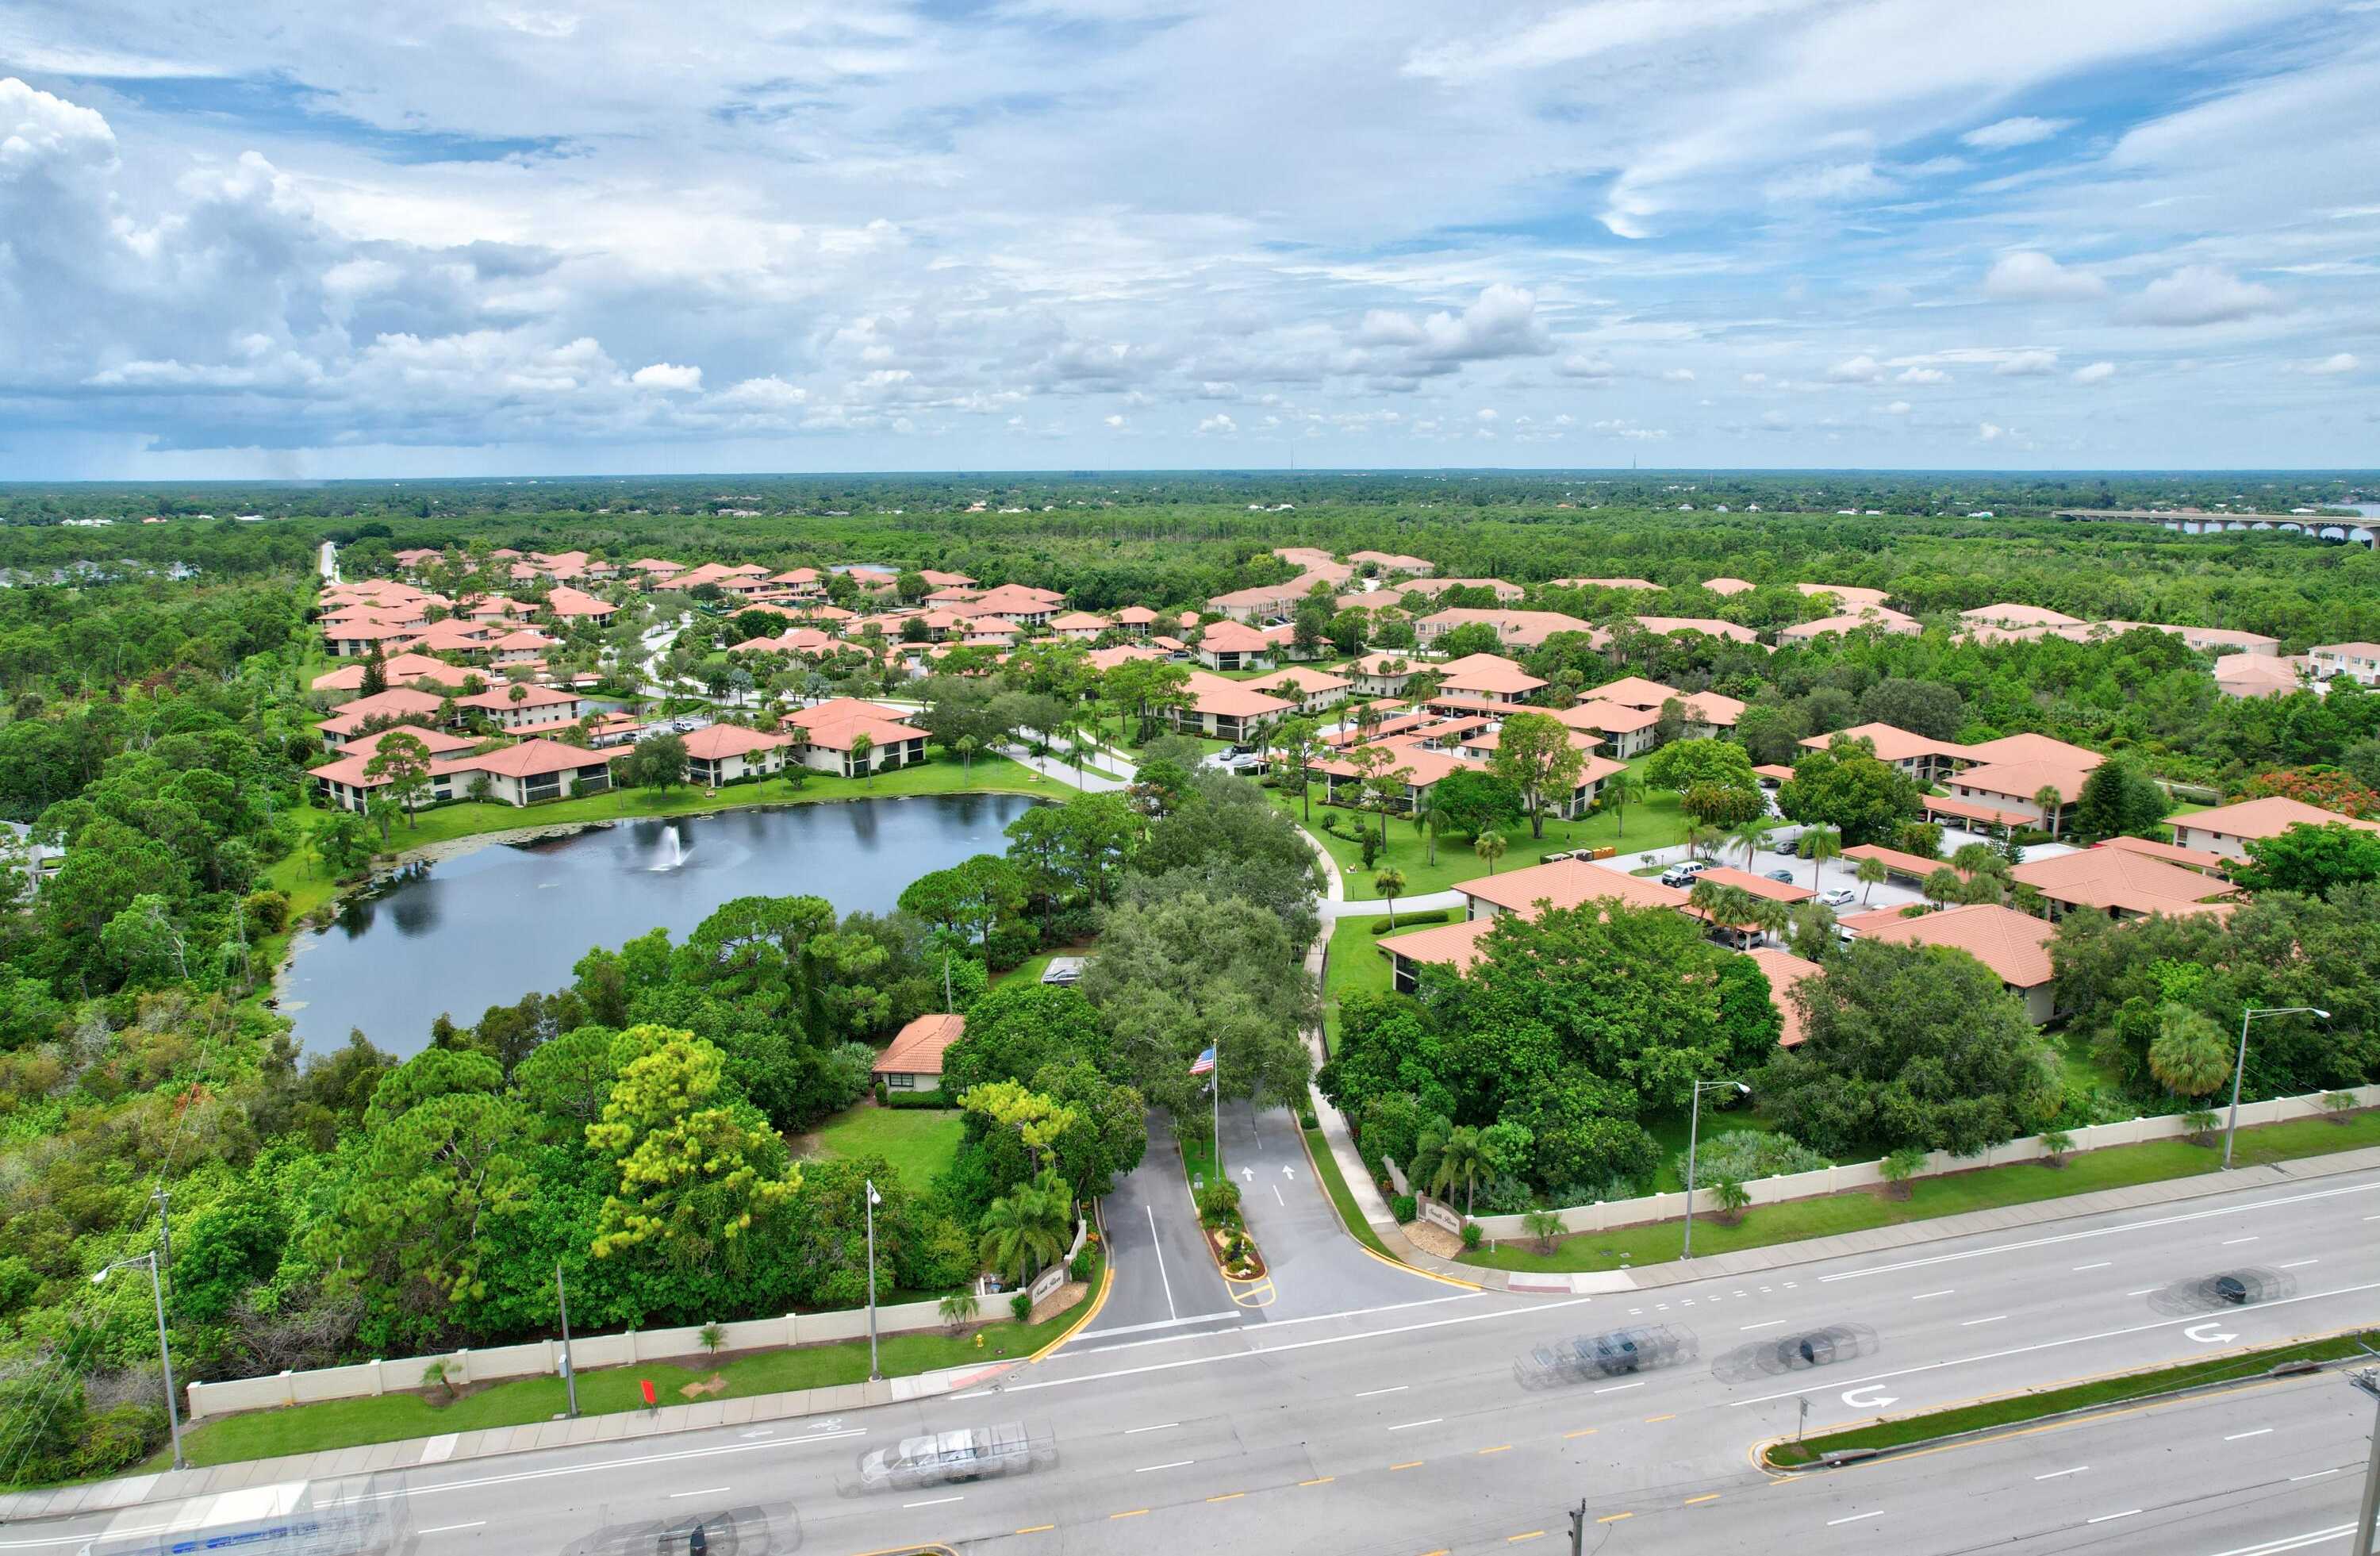 View Stuart, FL 34997 residential property